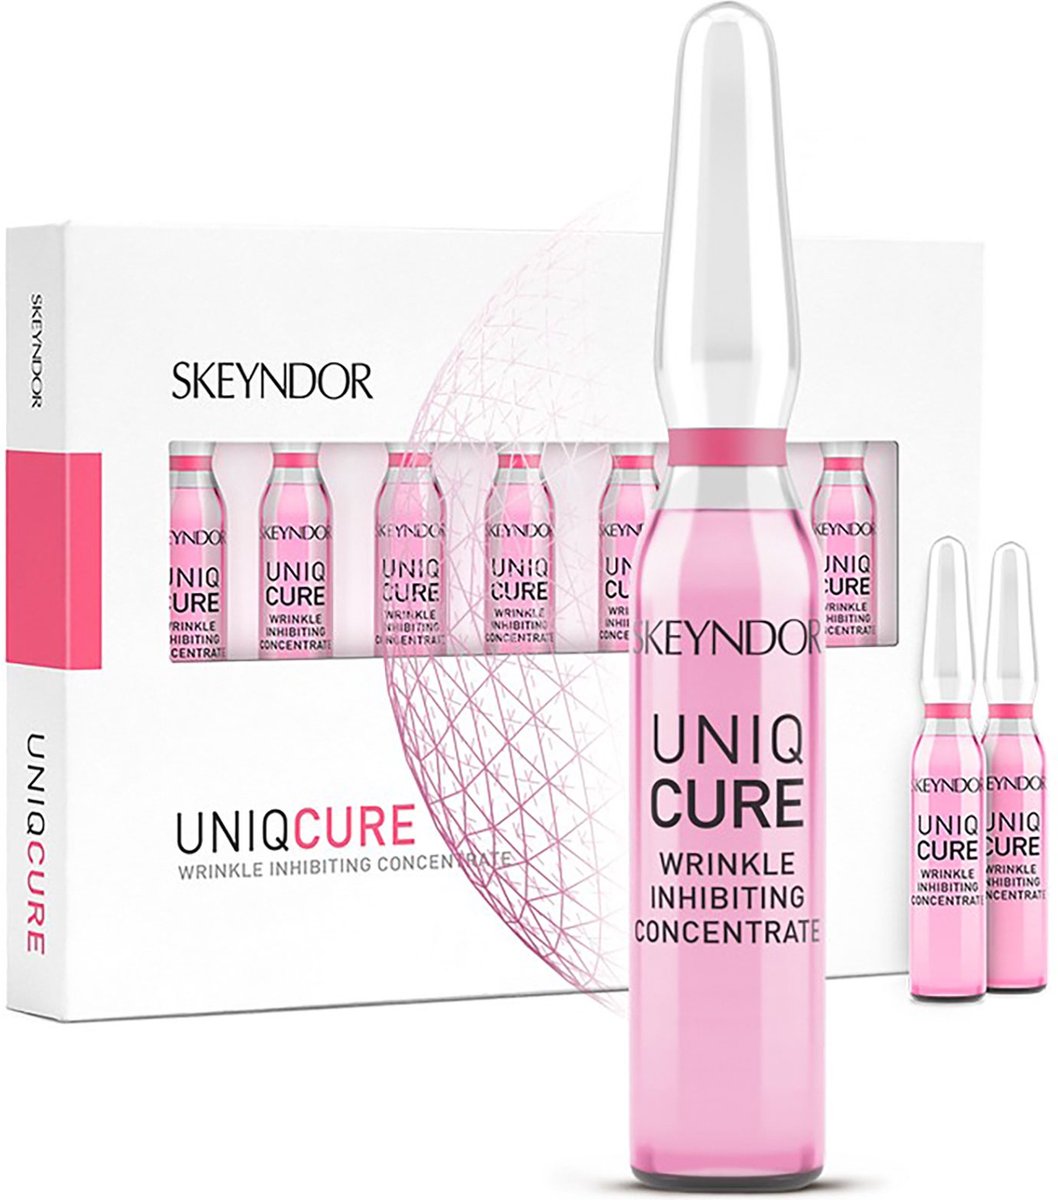 Skeyndor - Uniqcure - Wrinkle Inhibiting Concentrate (7 x 2 ml)